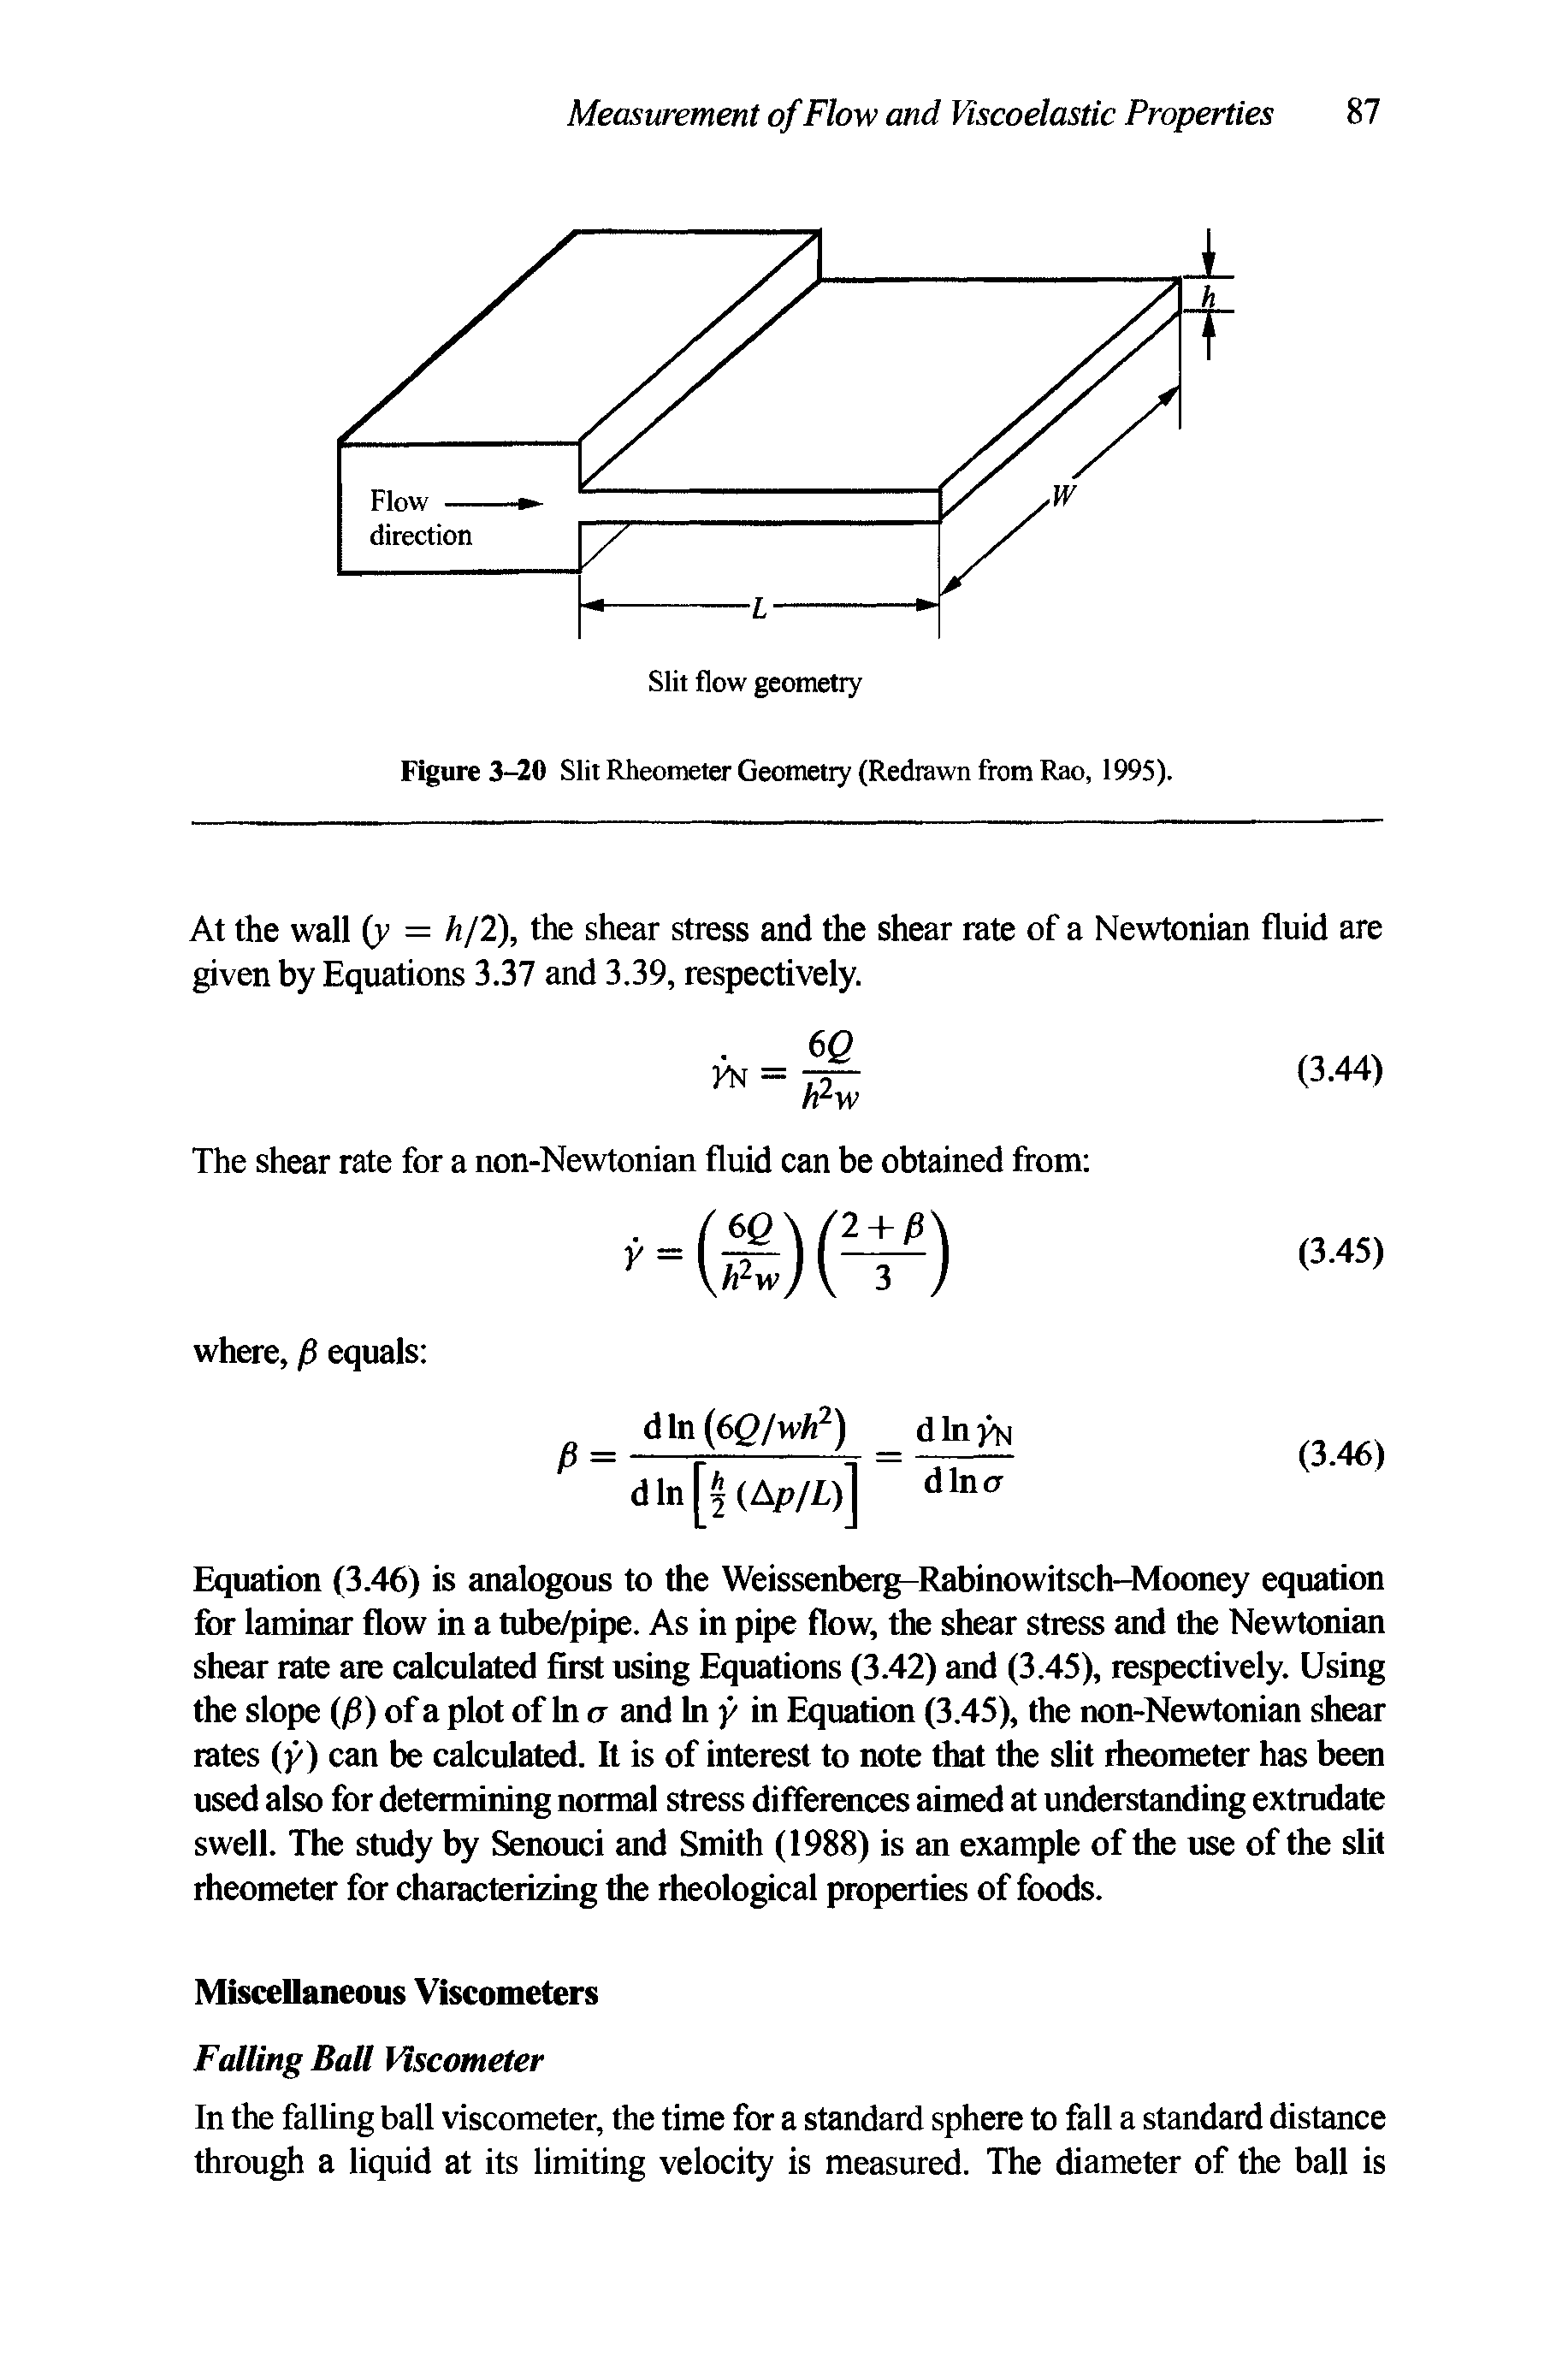 Figure 3-20 Slit Rheometer Geometry (Redrawn from Rao, 1995).